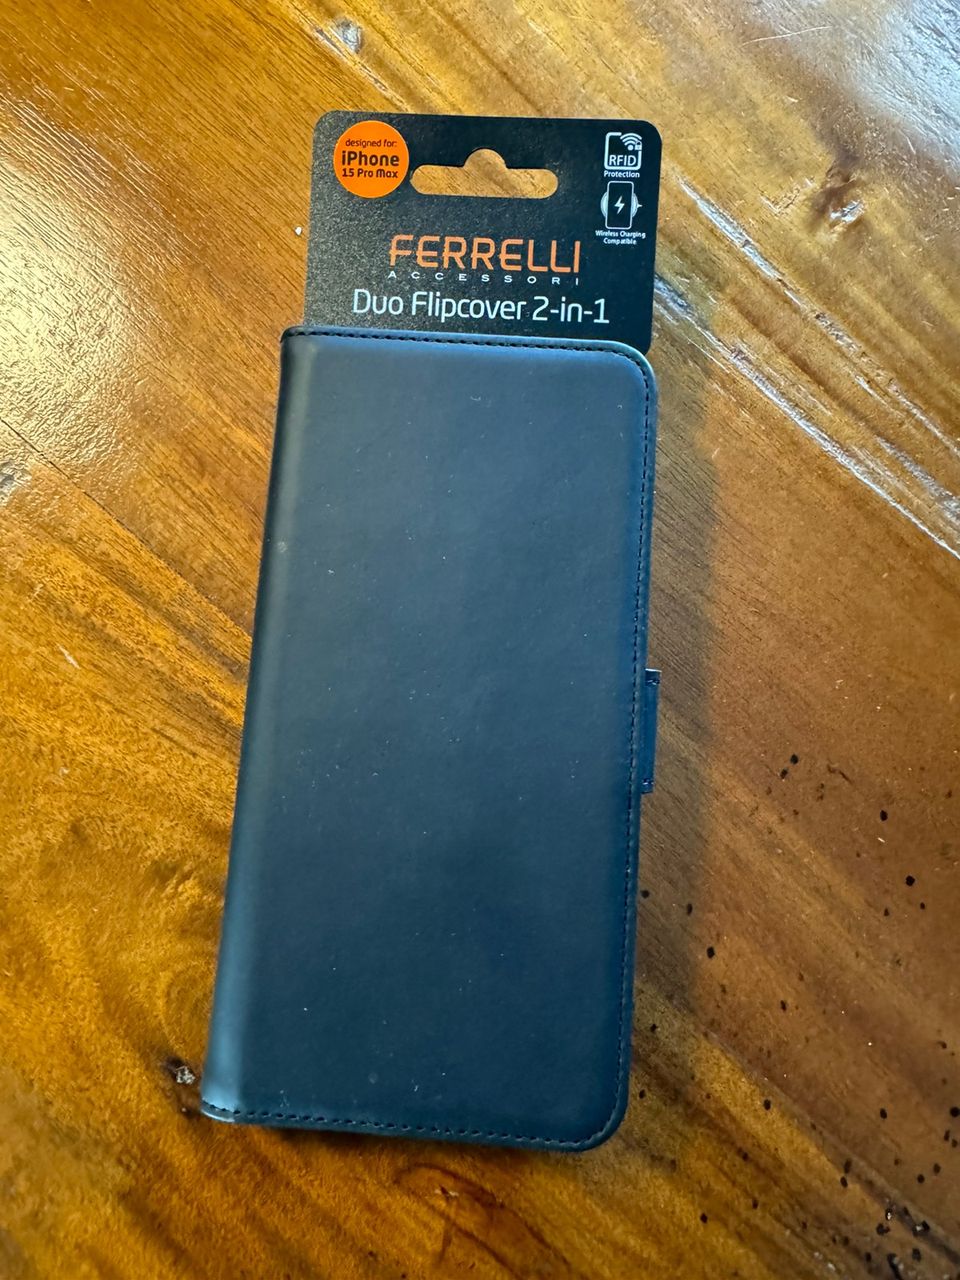 Ferrelli Iphone 15 Pro Max Duo Flip suojakuori. Uusi